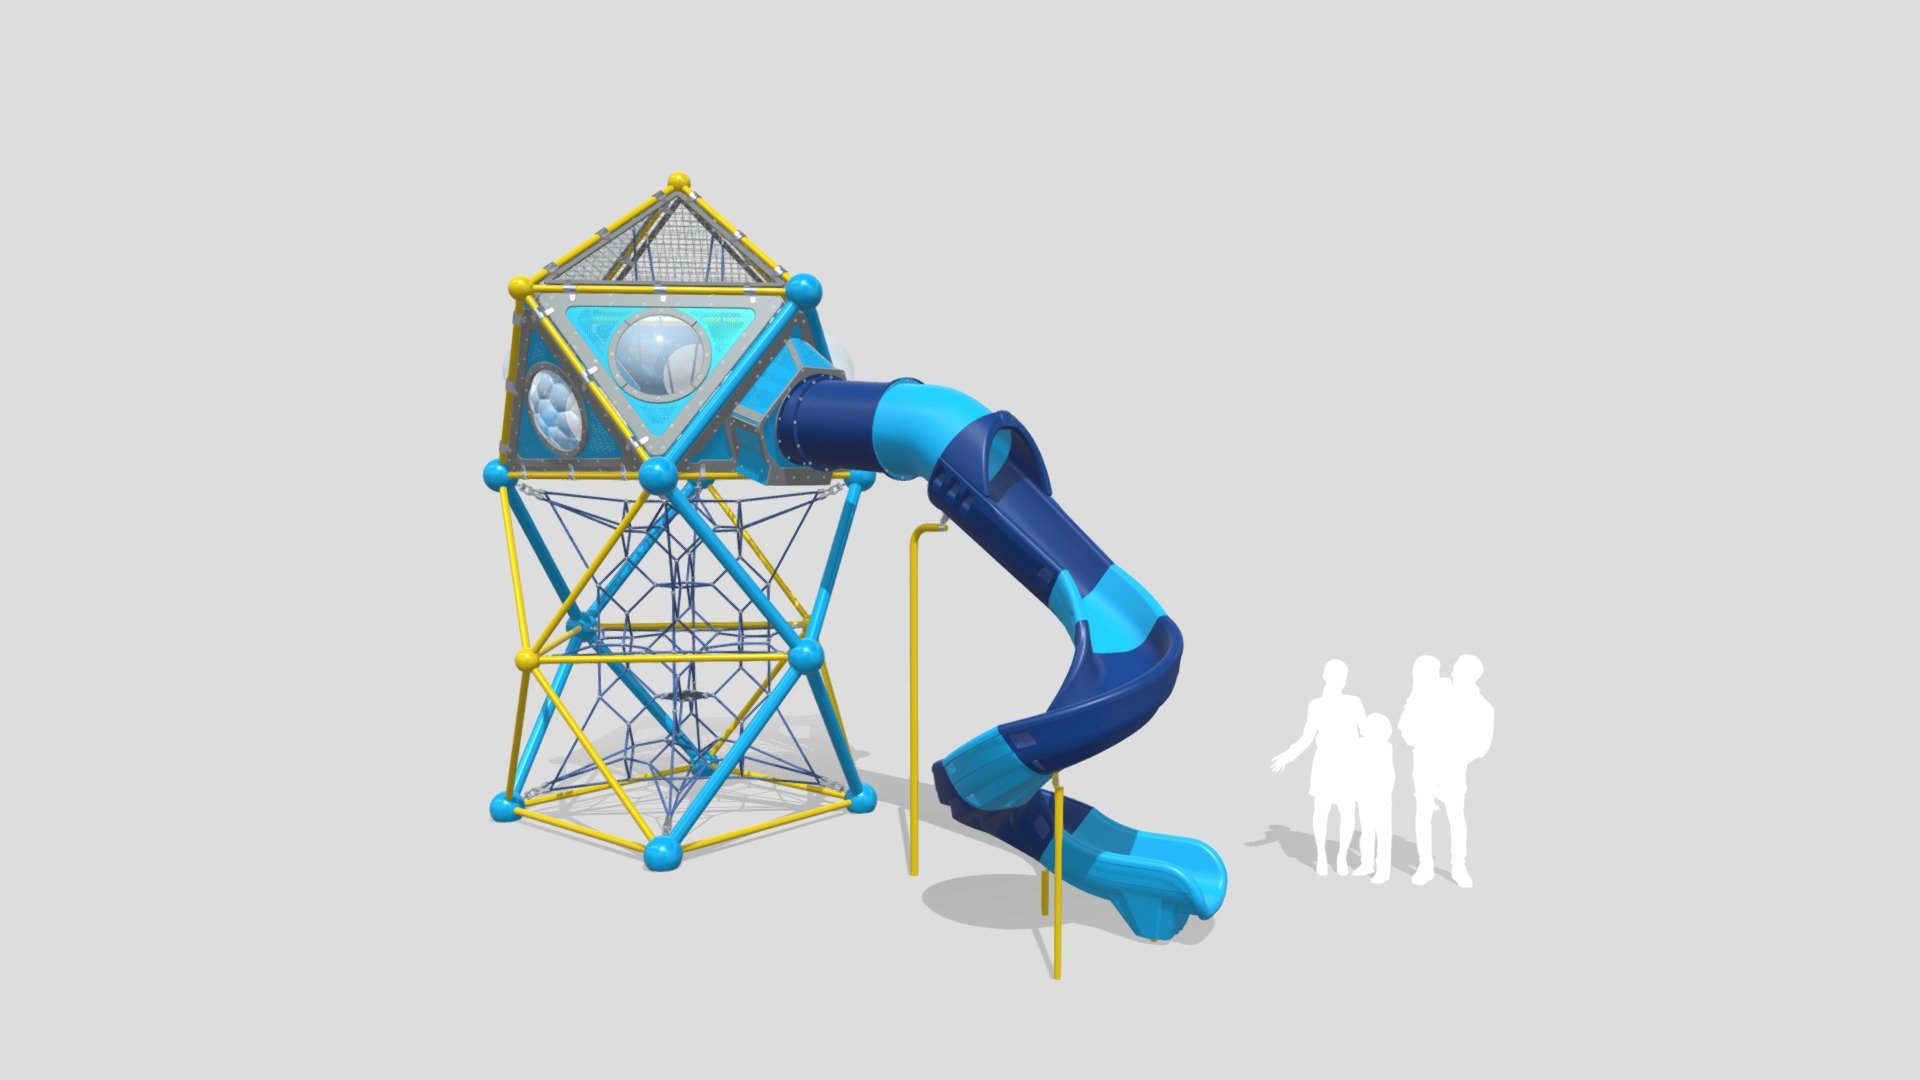 A2-NE-XMSP - Net Effects - Portal XM Tower - 3D model by Playcraft Systems, LLC. (@systemsupport) 3d model